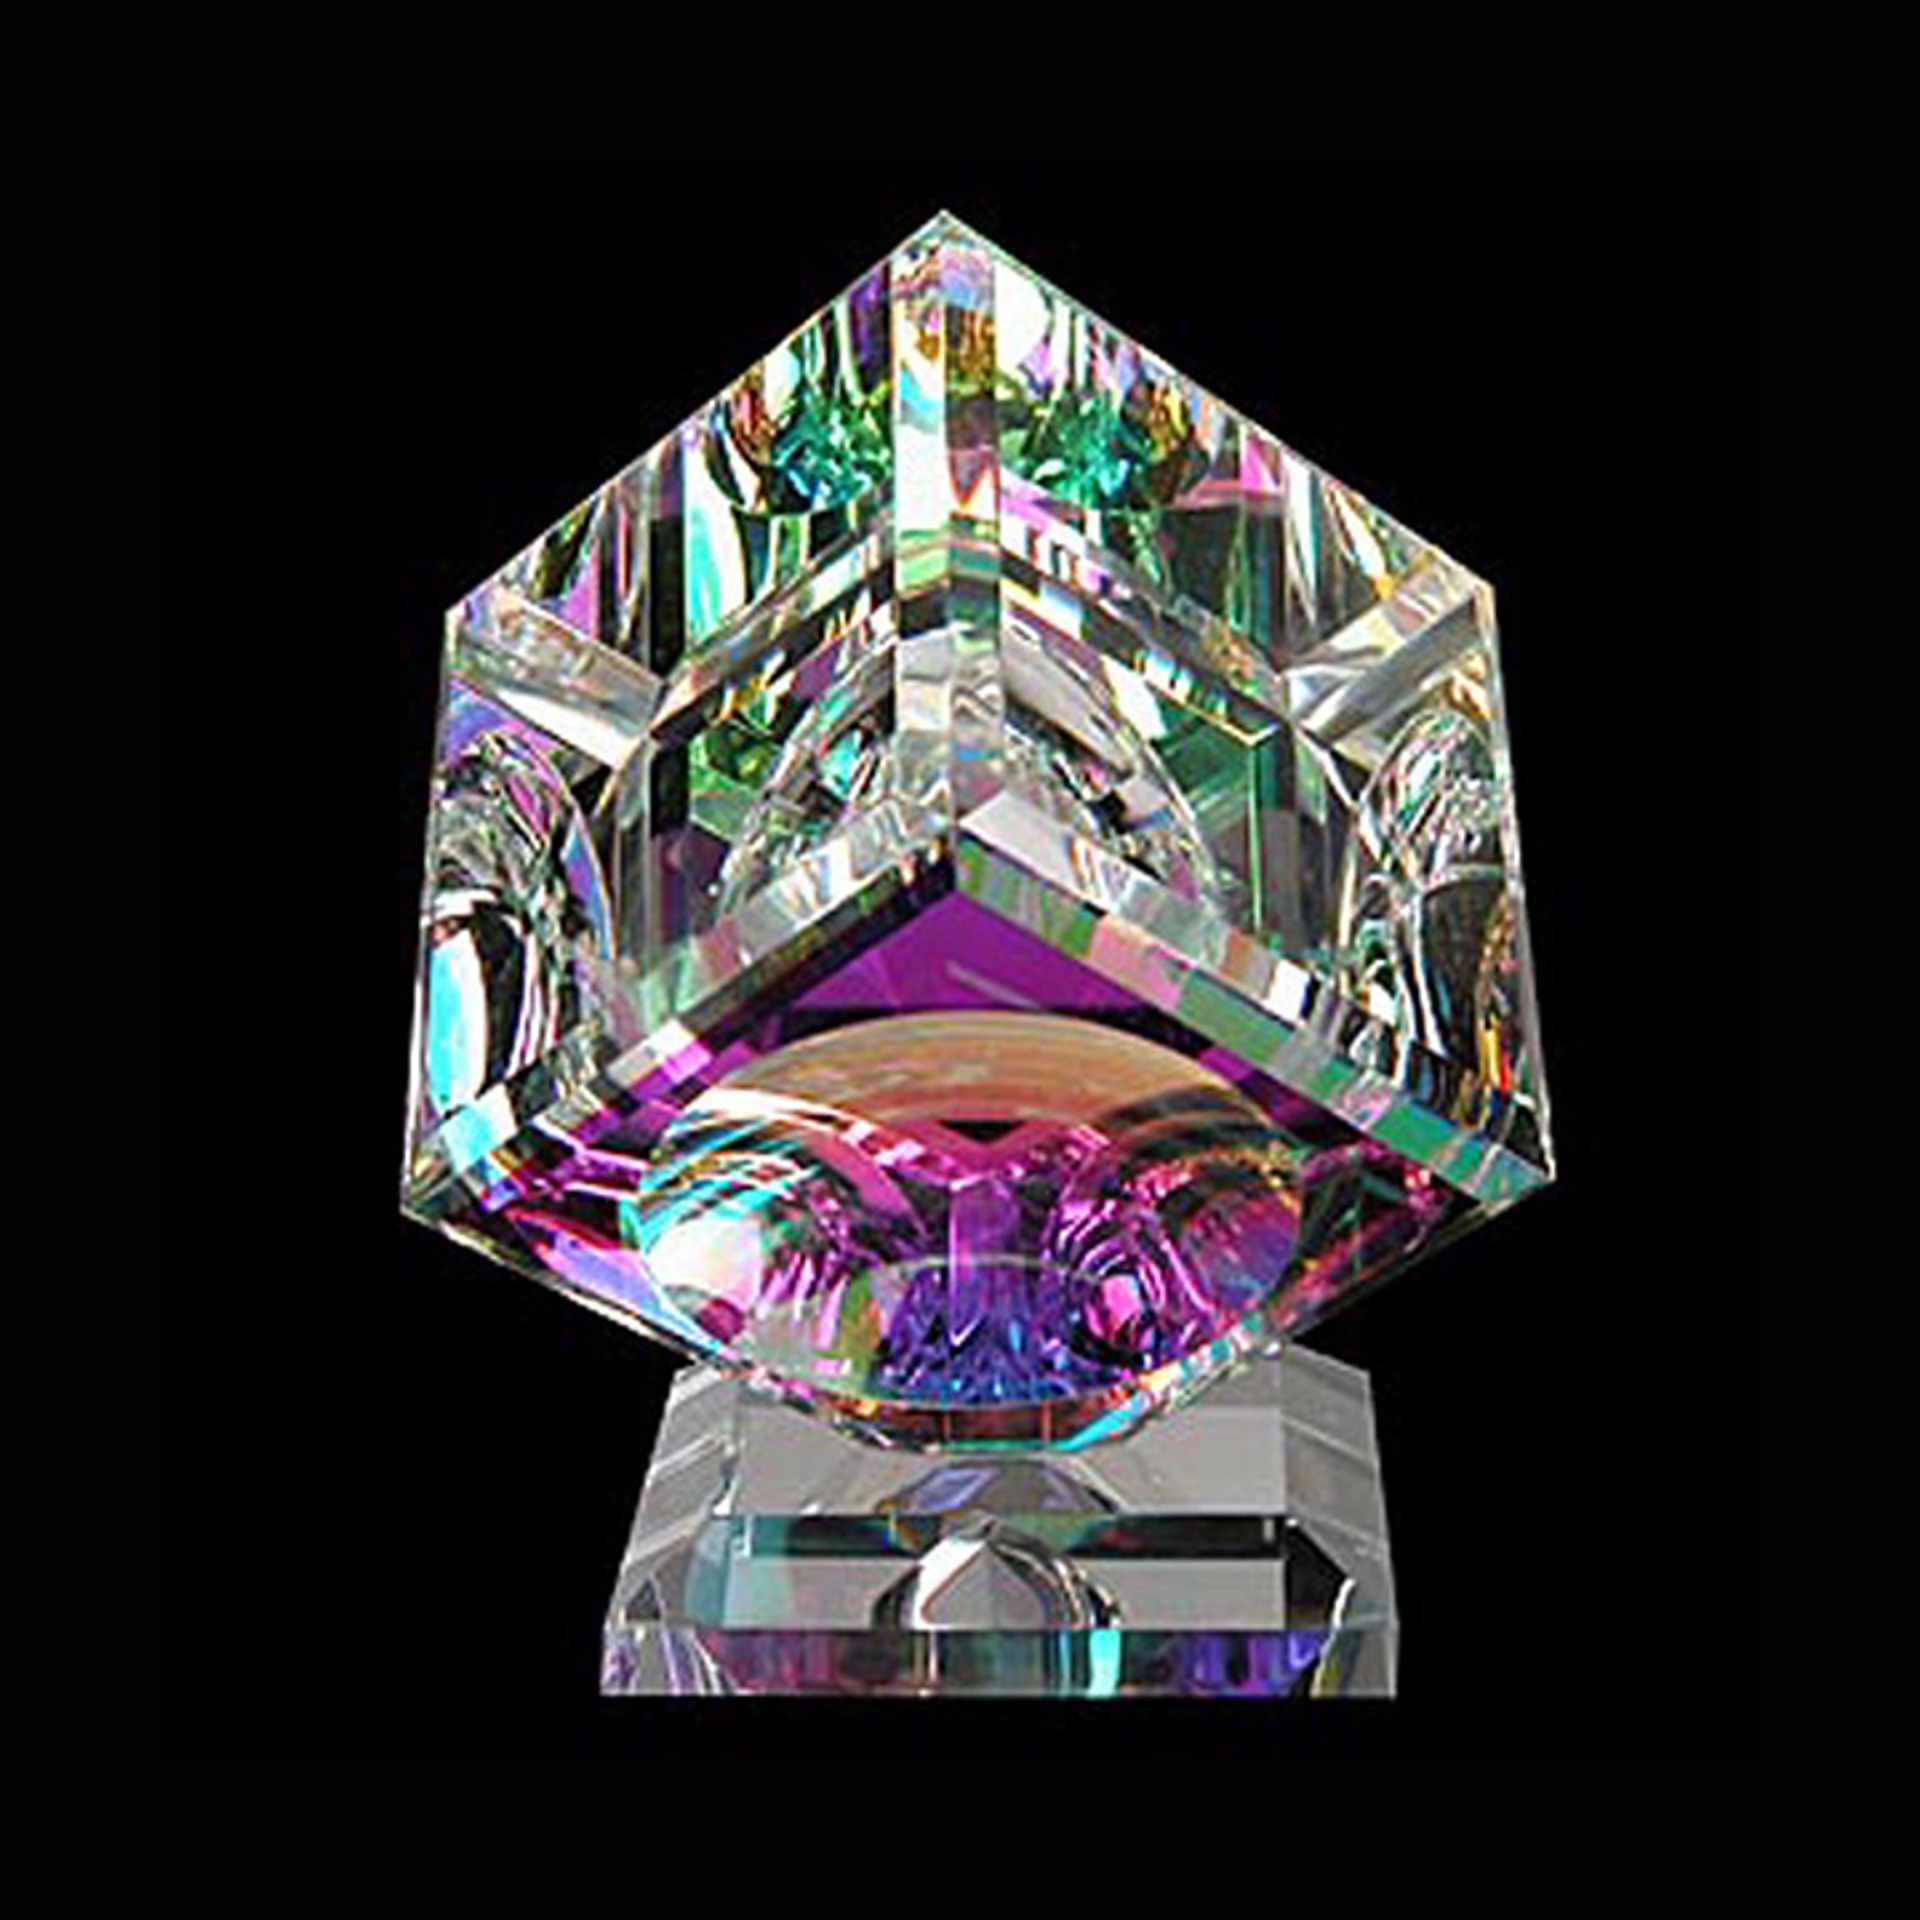 NFS-Crystal Cube 100mm (4") "B" Bevel on Base by Harold Lustig